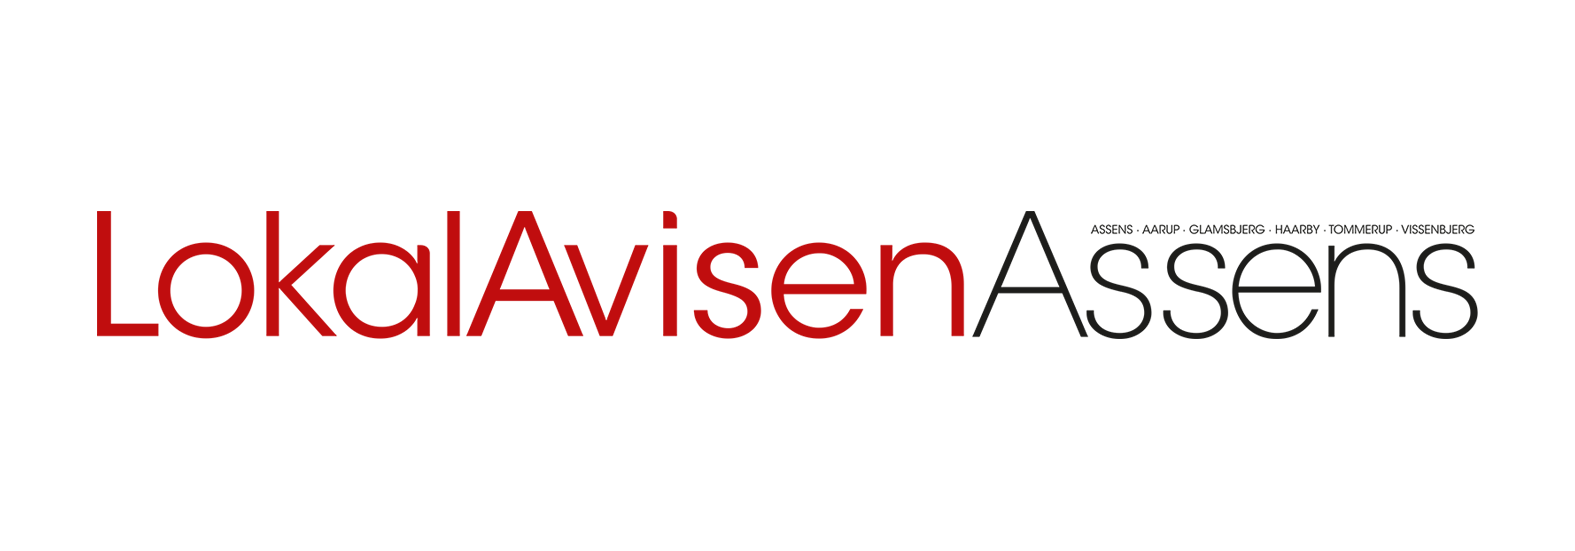 Lokalavisen Assens logo